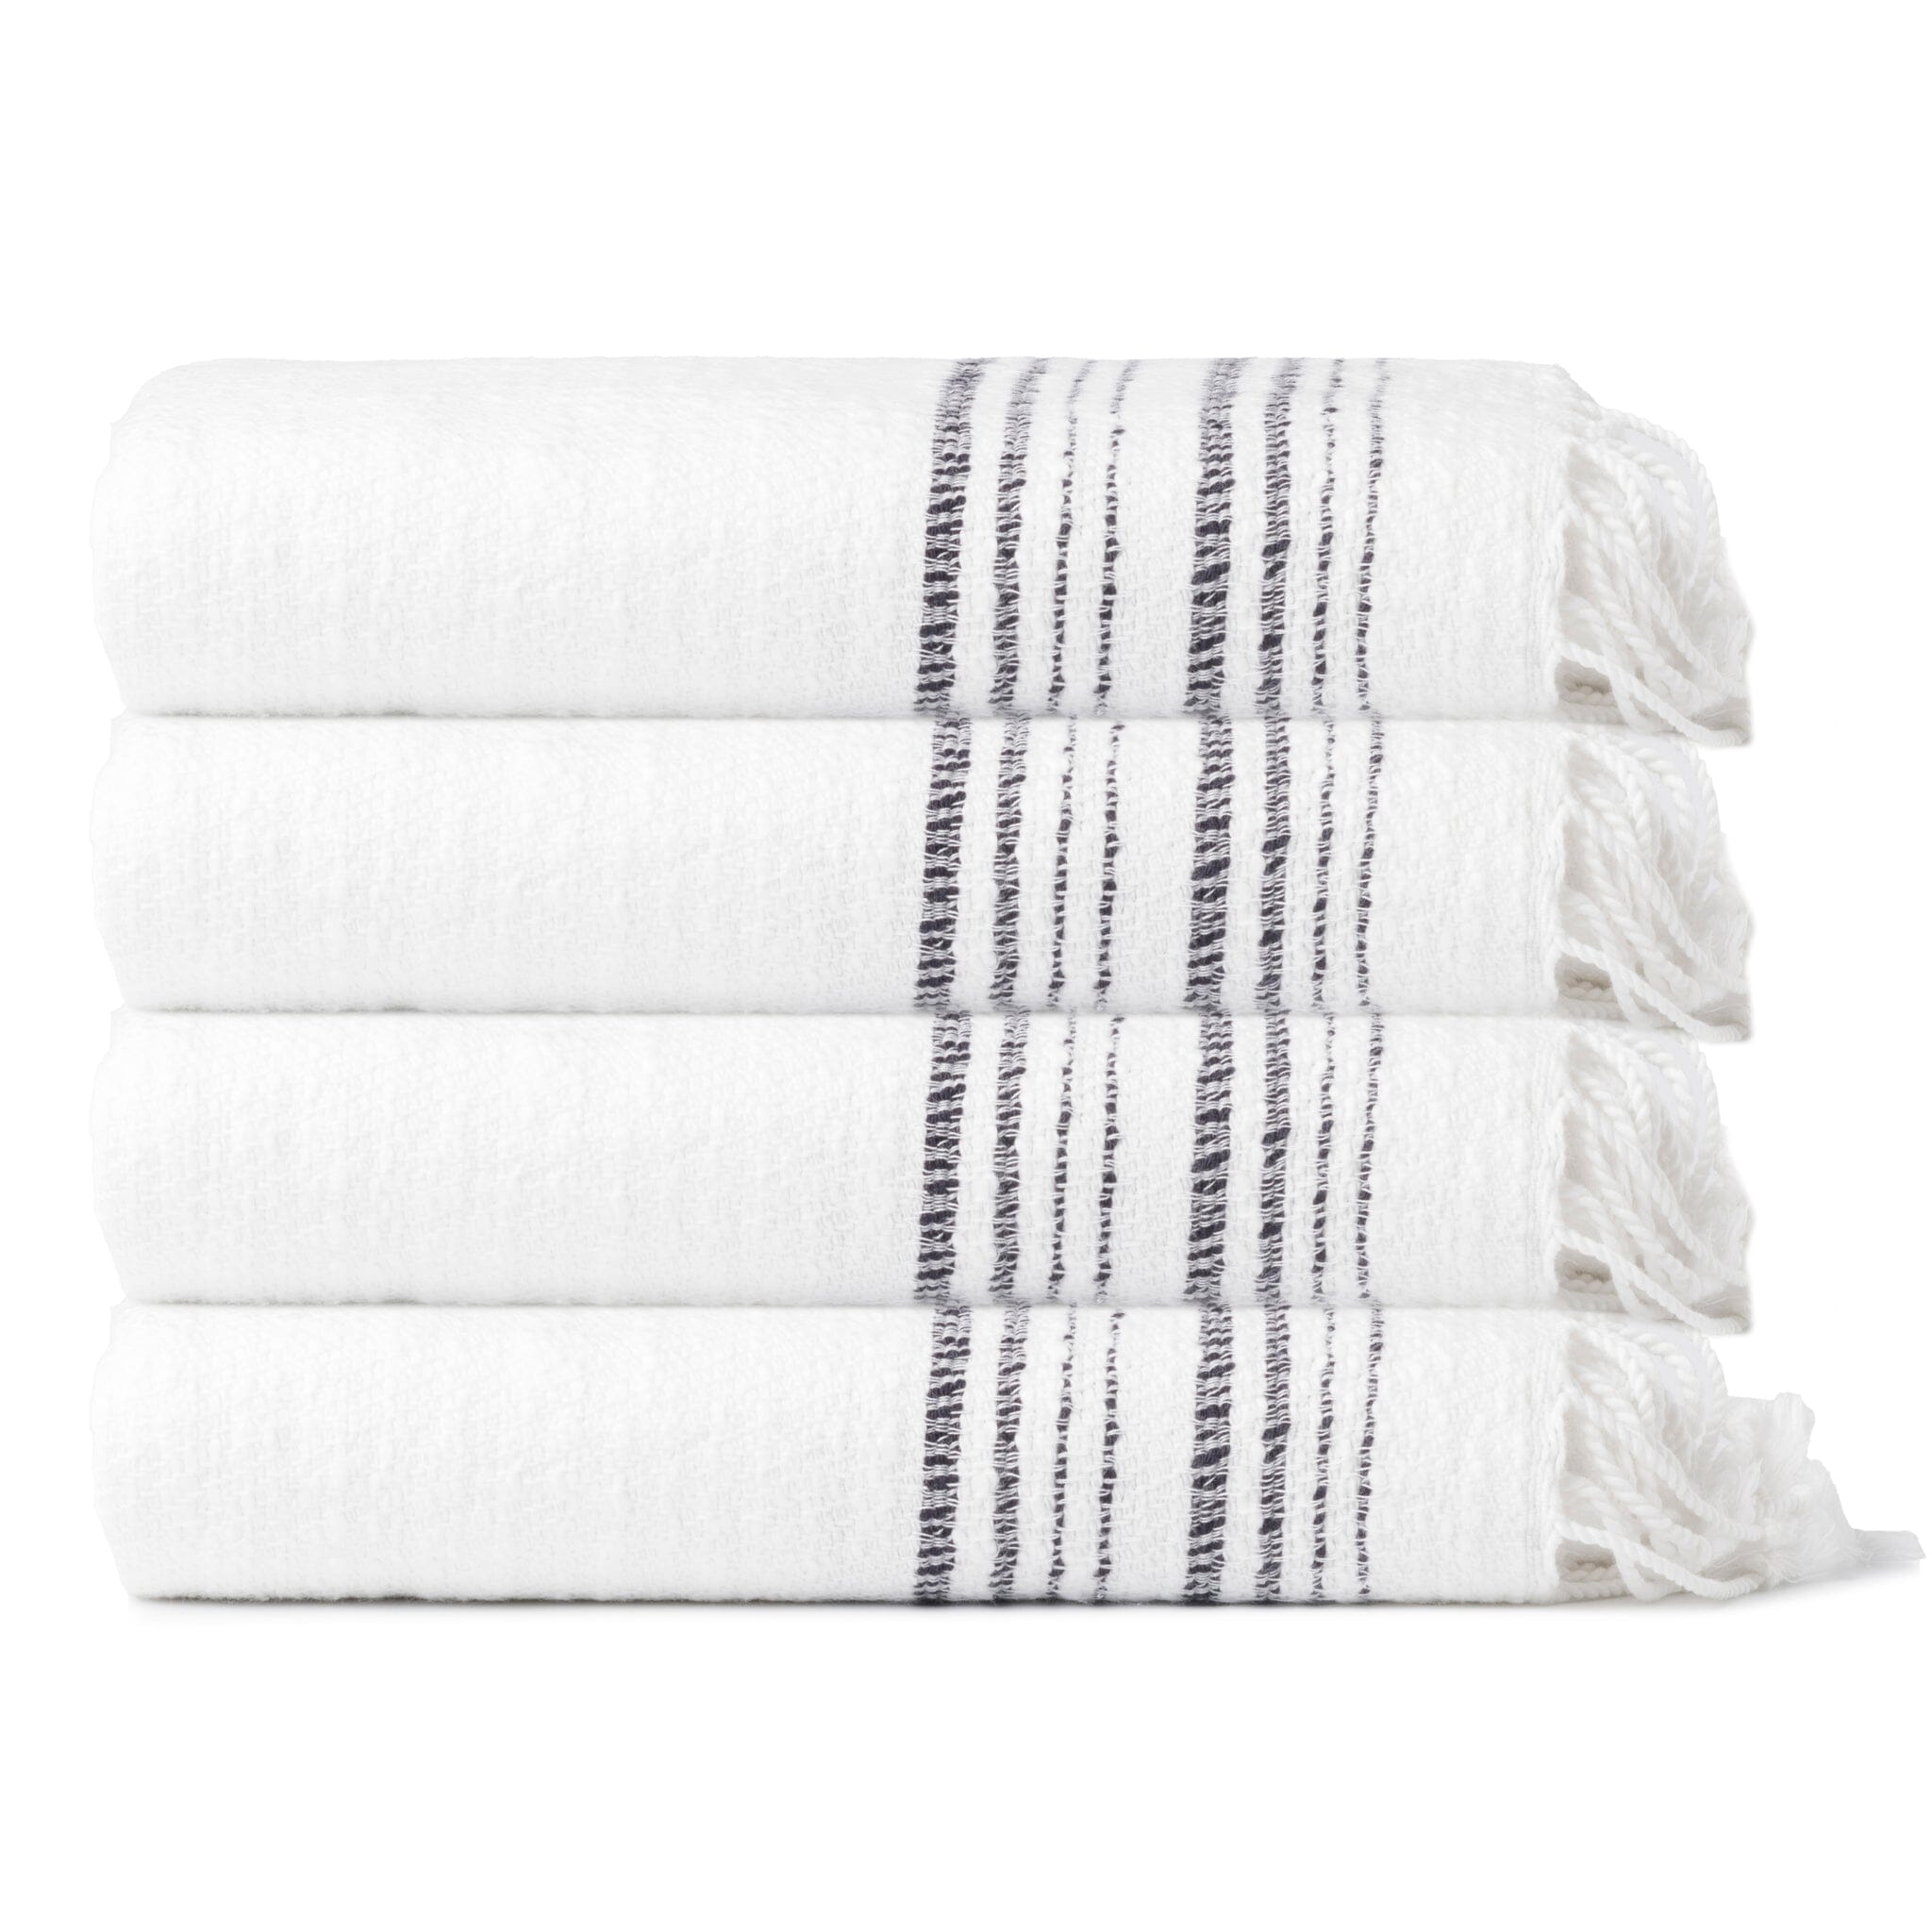 Linen Casa Kitchen Towel - Black Stripes on Antique White